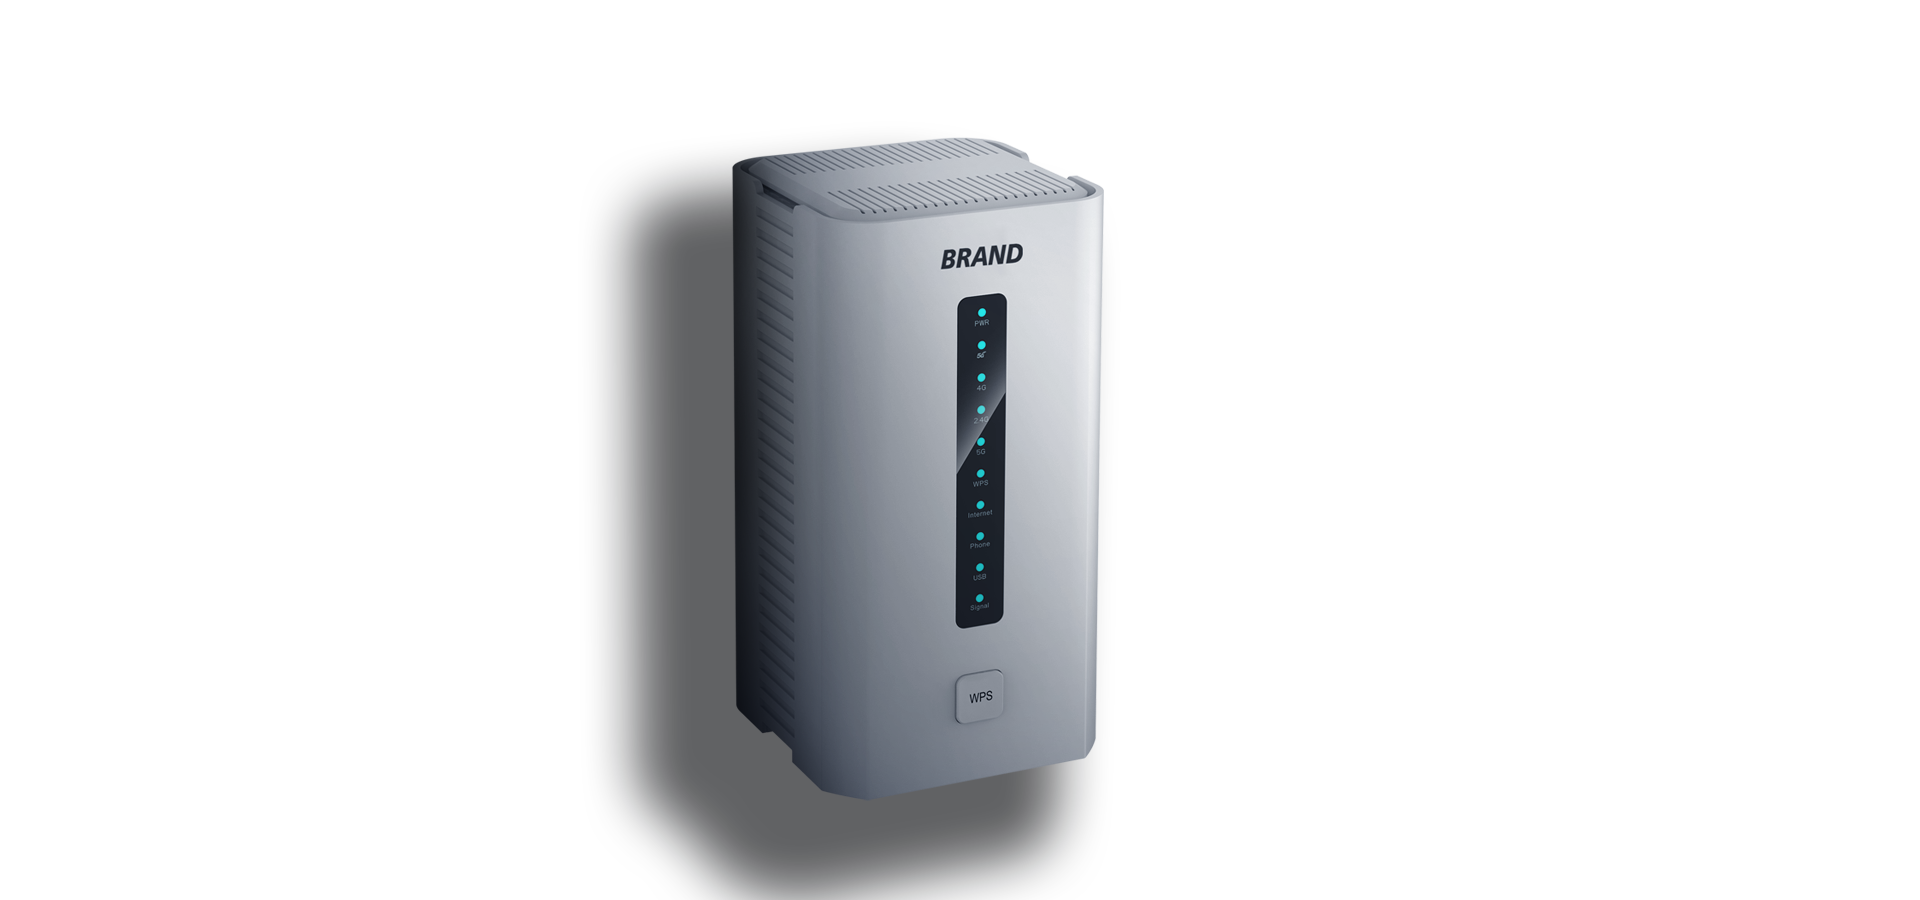 Unlocked Fiberhome 5G CPE router NSA+SA modem 5g wifi sim card Cat19  hotspot Wireless repeater extender wifi 6 with RJ11/RJ45